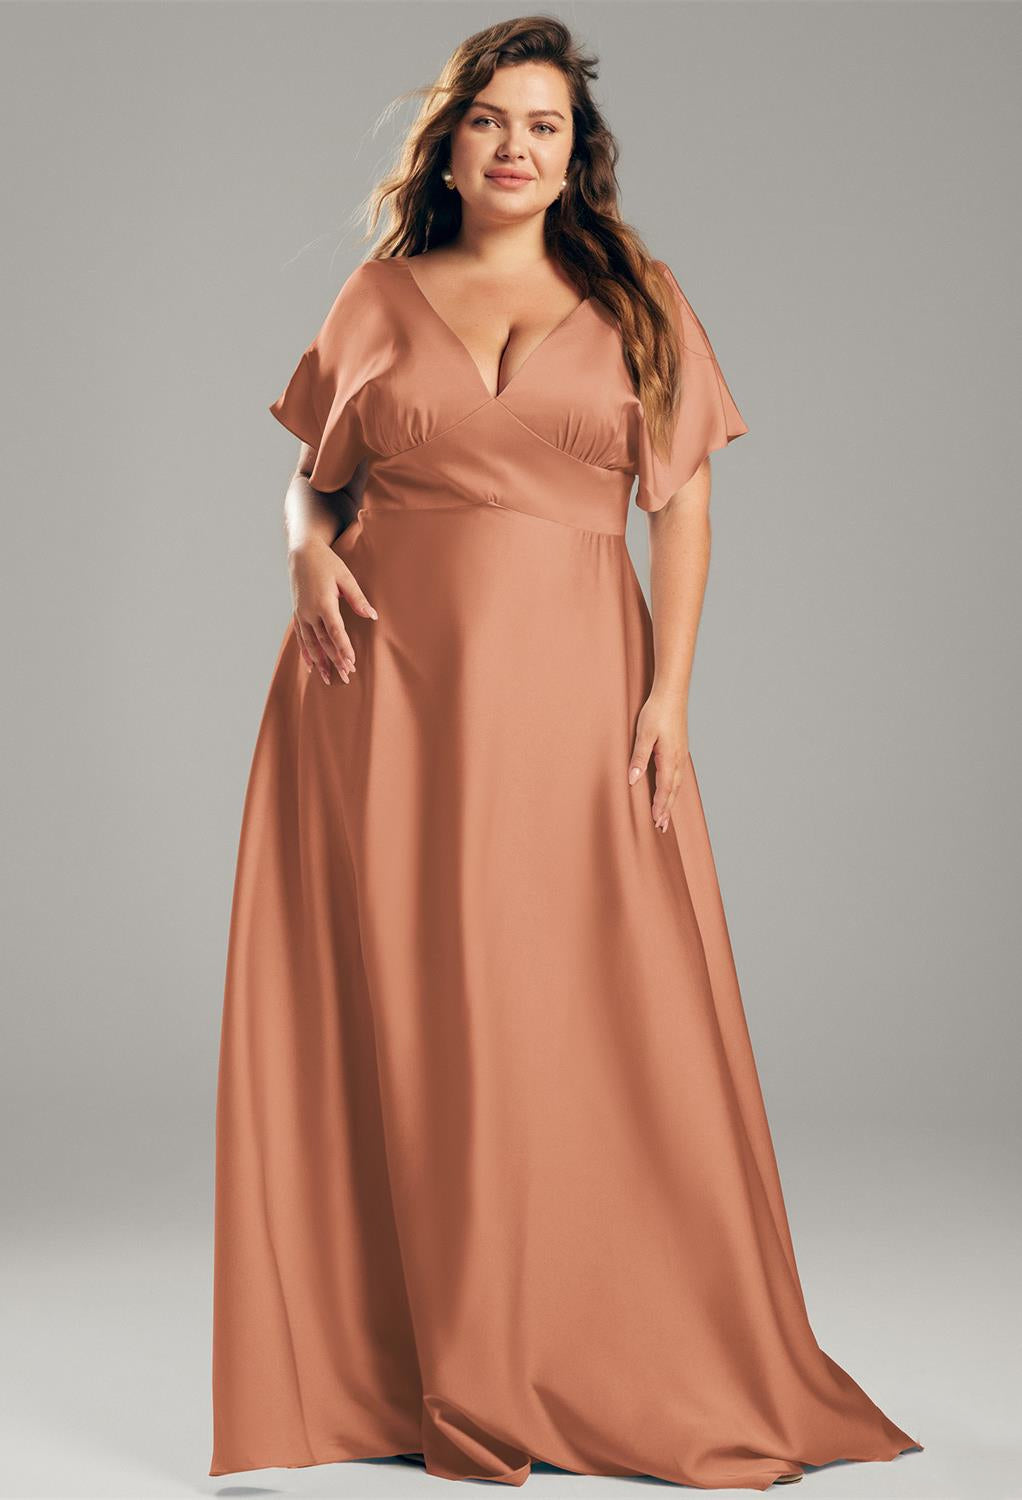 Nora - Satin Charmeuse Bridesmaid Dress